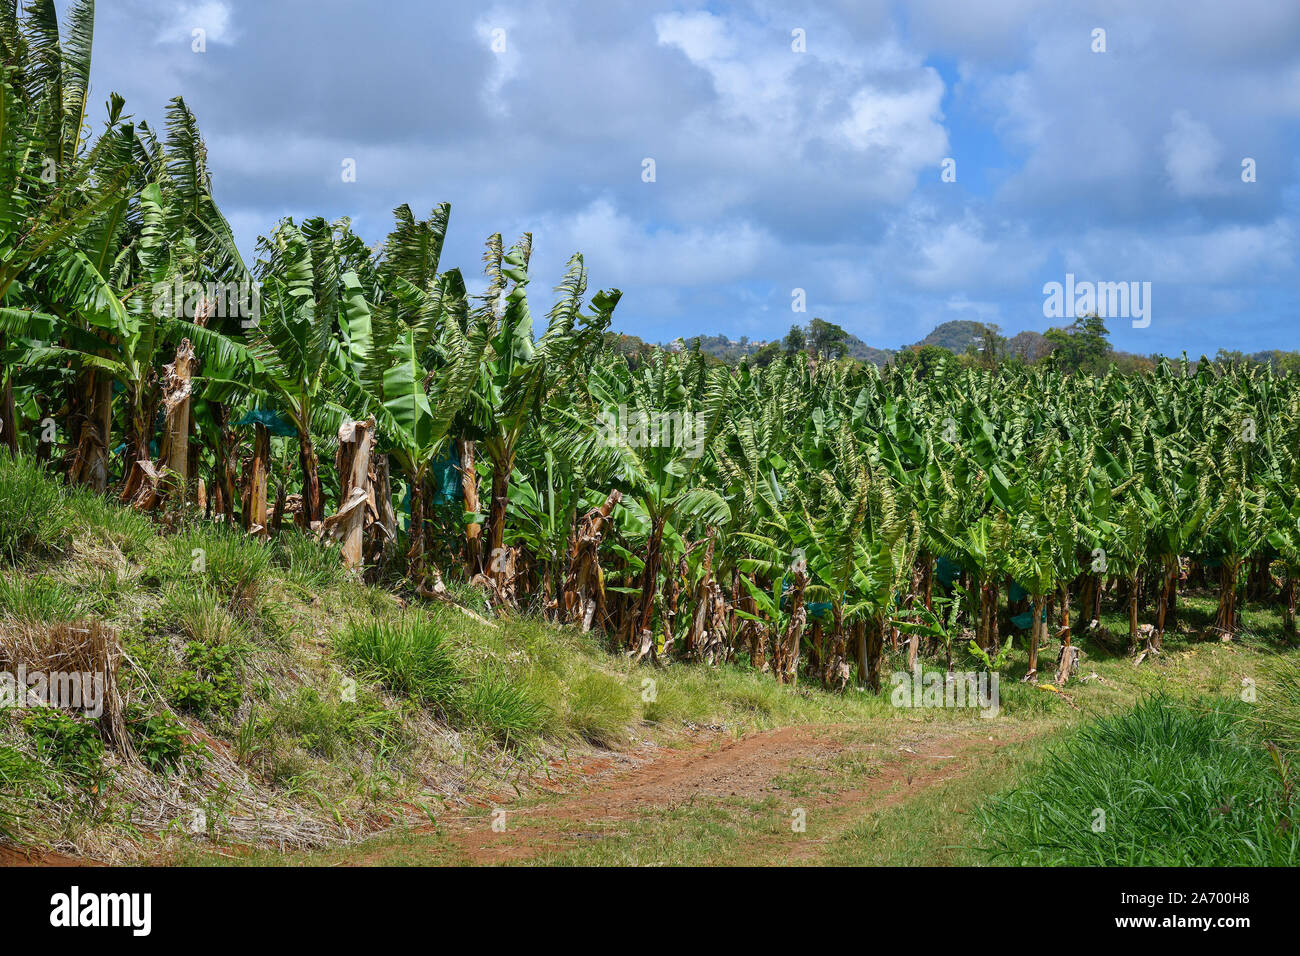 Martinique, Bananenplantagen in der Umgebung von Le Francois. Bananenplantagen, die Erzeugung von Bananen aus Martinique Stockfoto